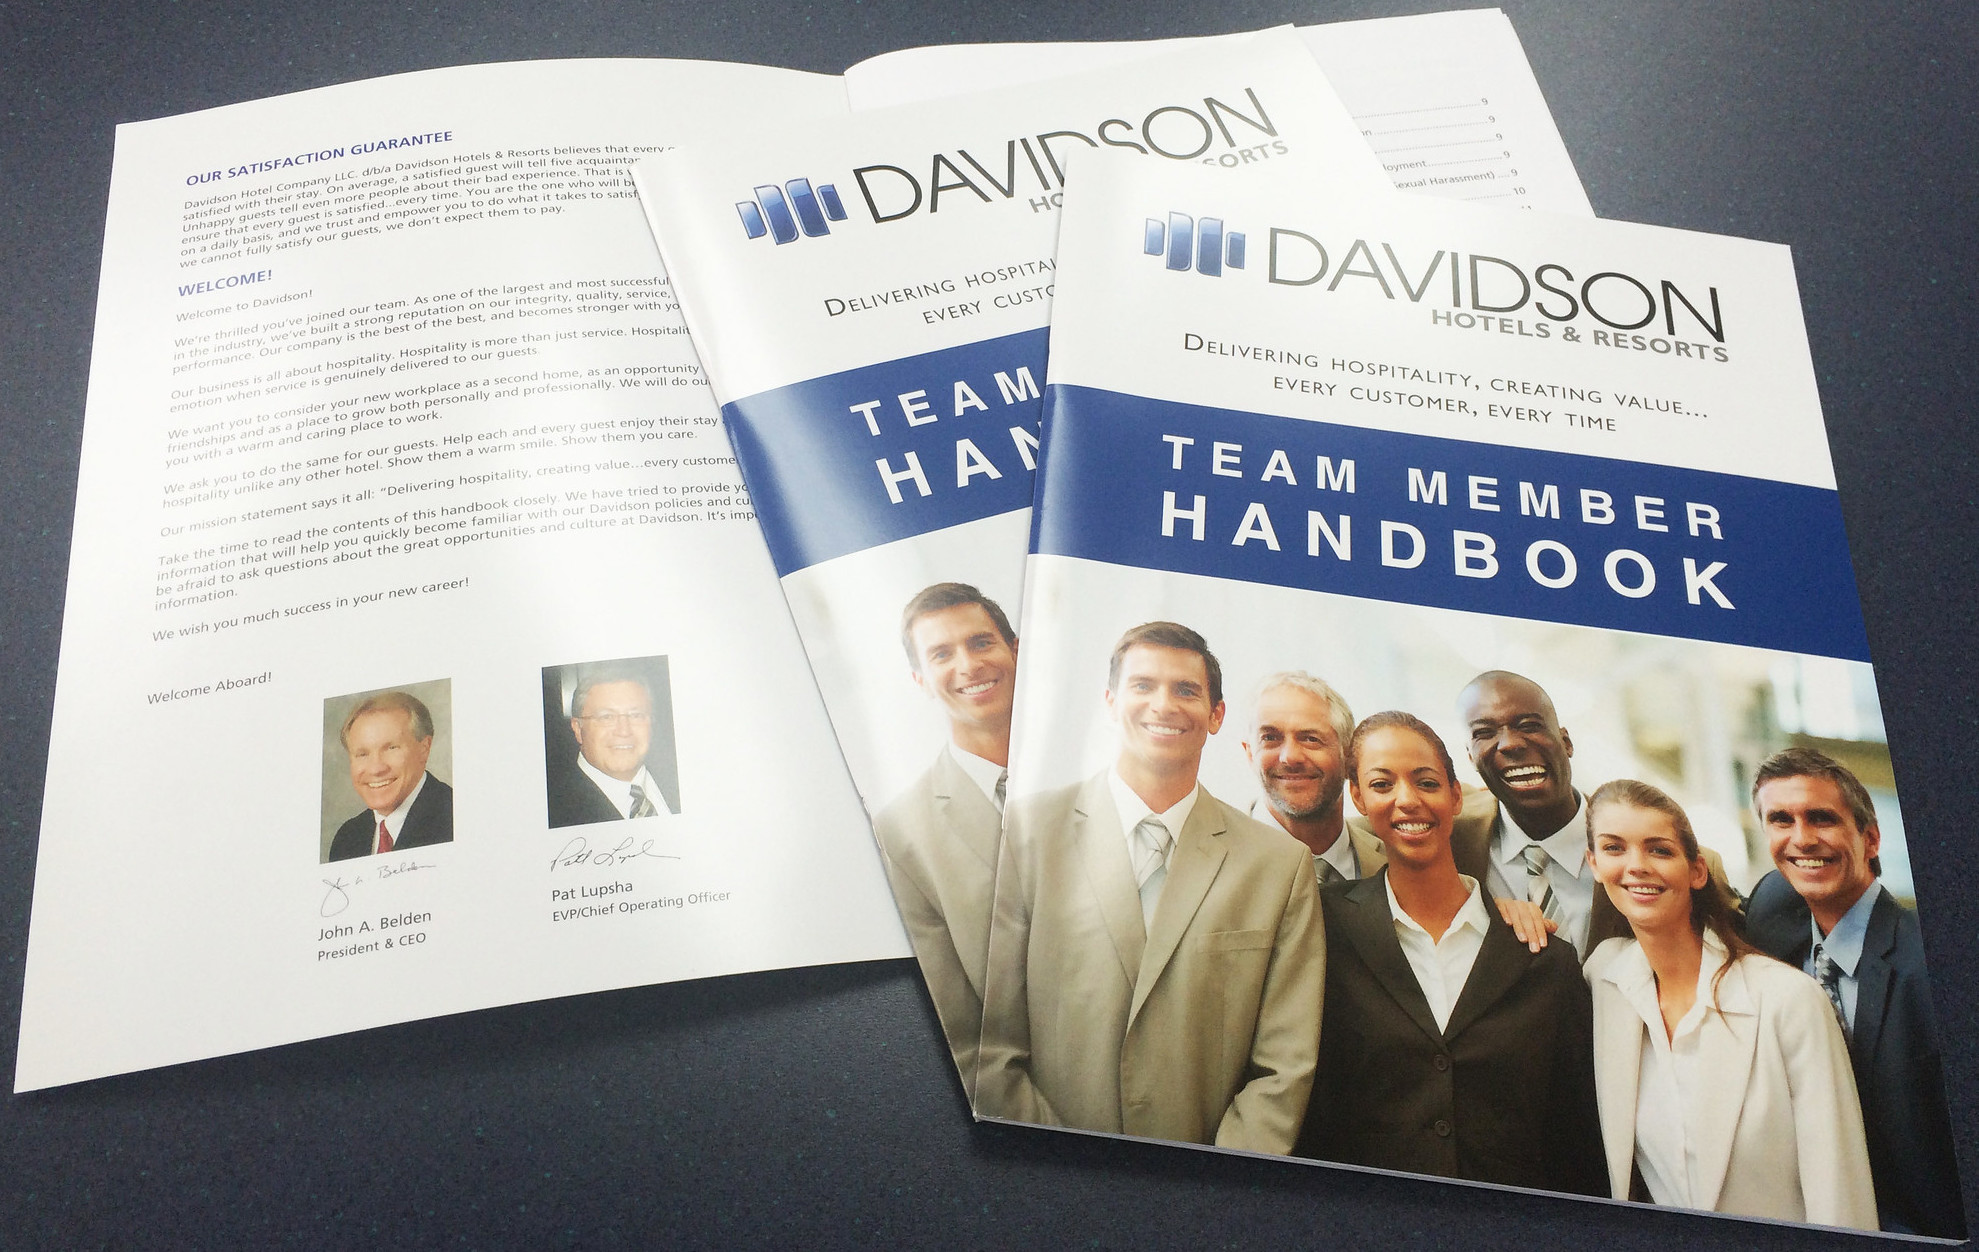 Handbook for the Davidson Hotel Group